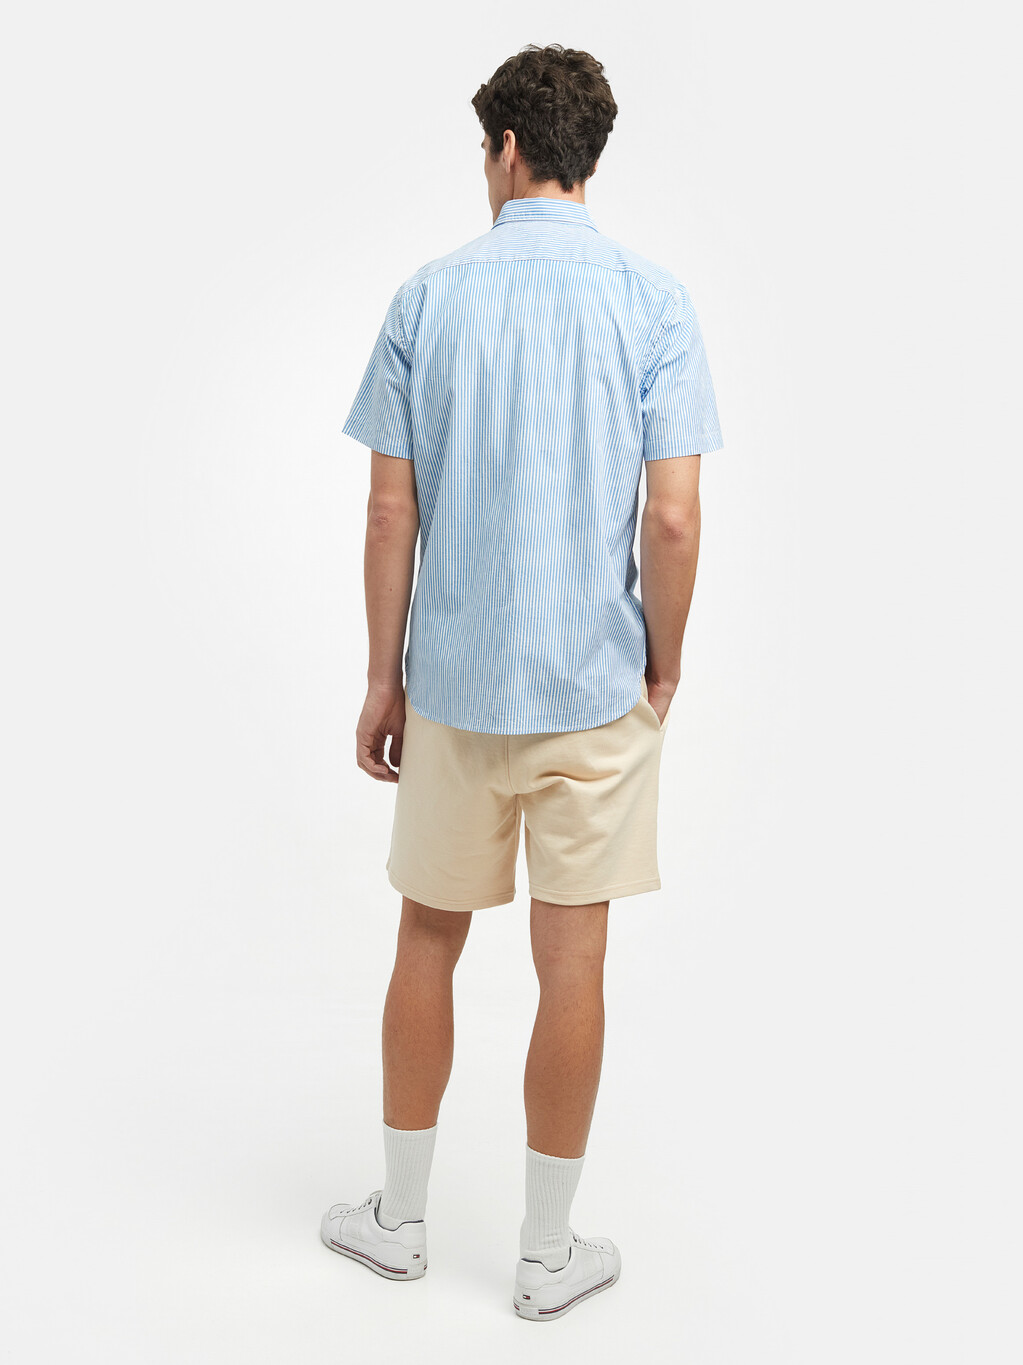 Tommy Hilfiger Flex Poplin Stripe Shirt, Shocking Blue/Th Optic White, hi-res